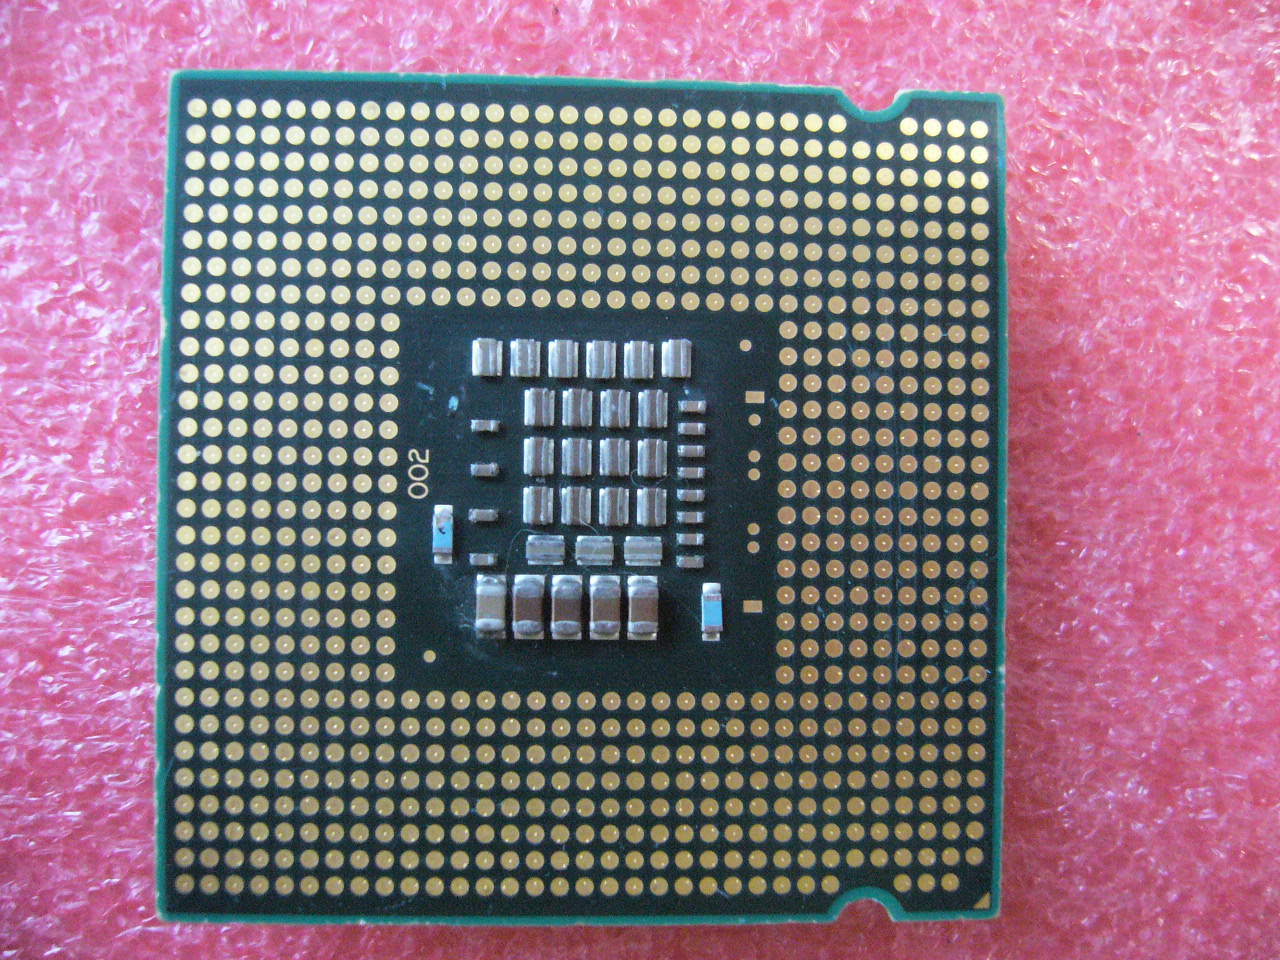 QTY 1x INTEL Core 2 Duo E8500 CPU 3.16GHz 6MB/1333Mhz LGA775 SLB9K SLAPK - zum Schließen ins Bild klicken